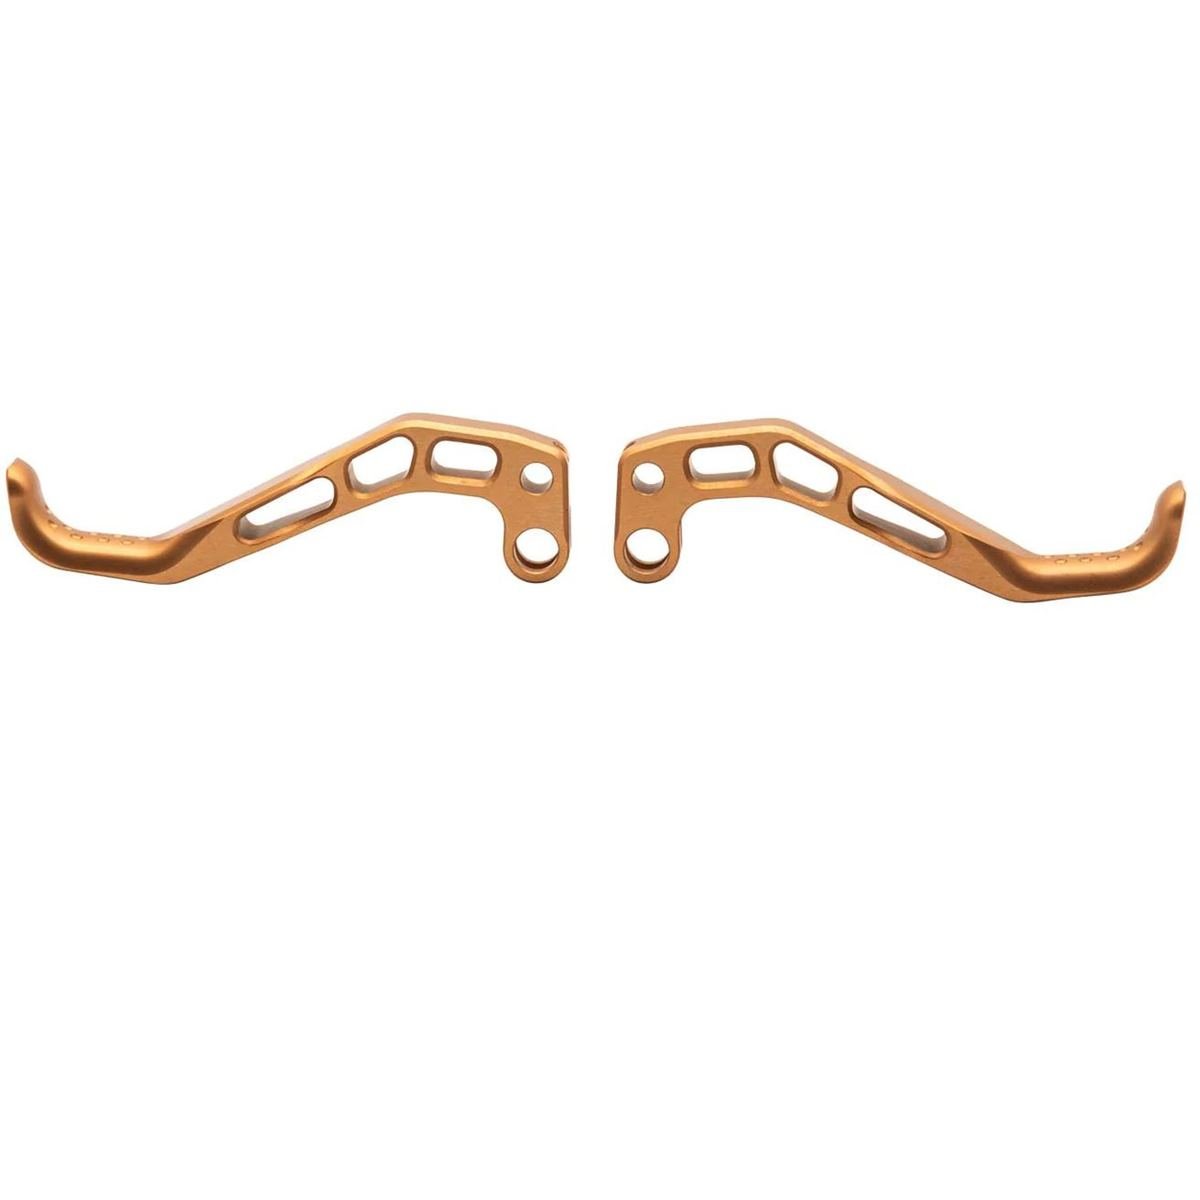 OAK Components MTB brake lever set TRL TRP, Copper